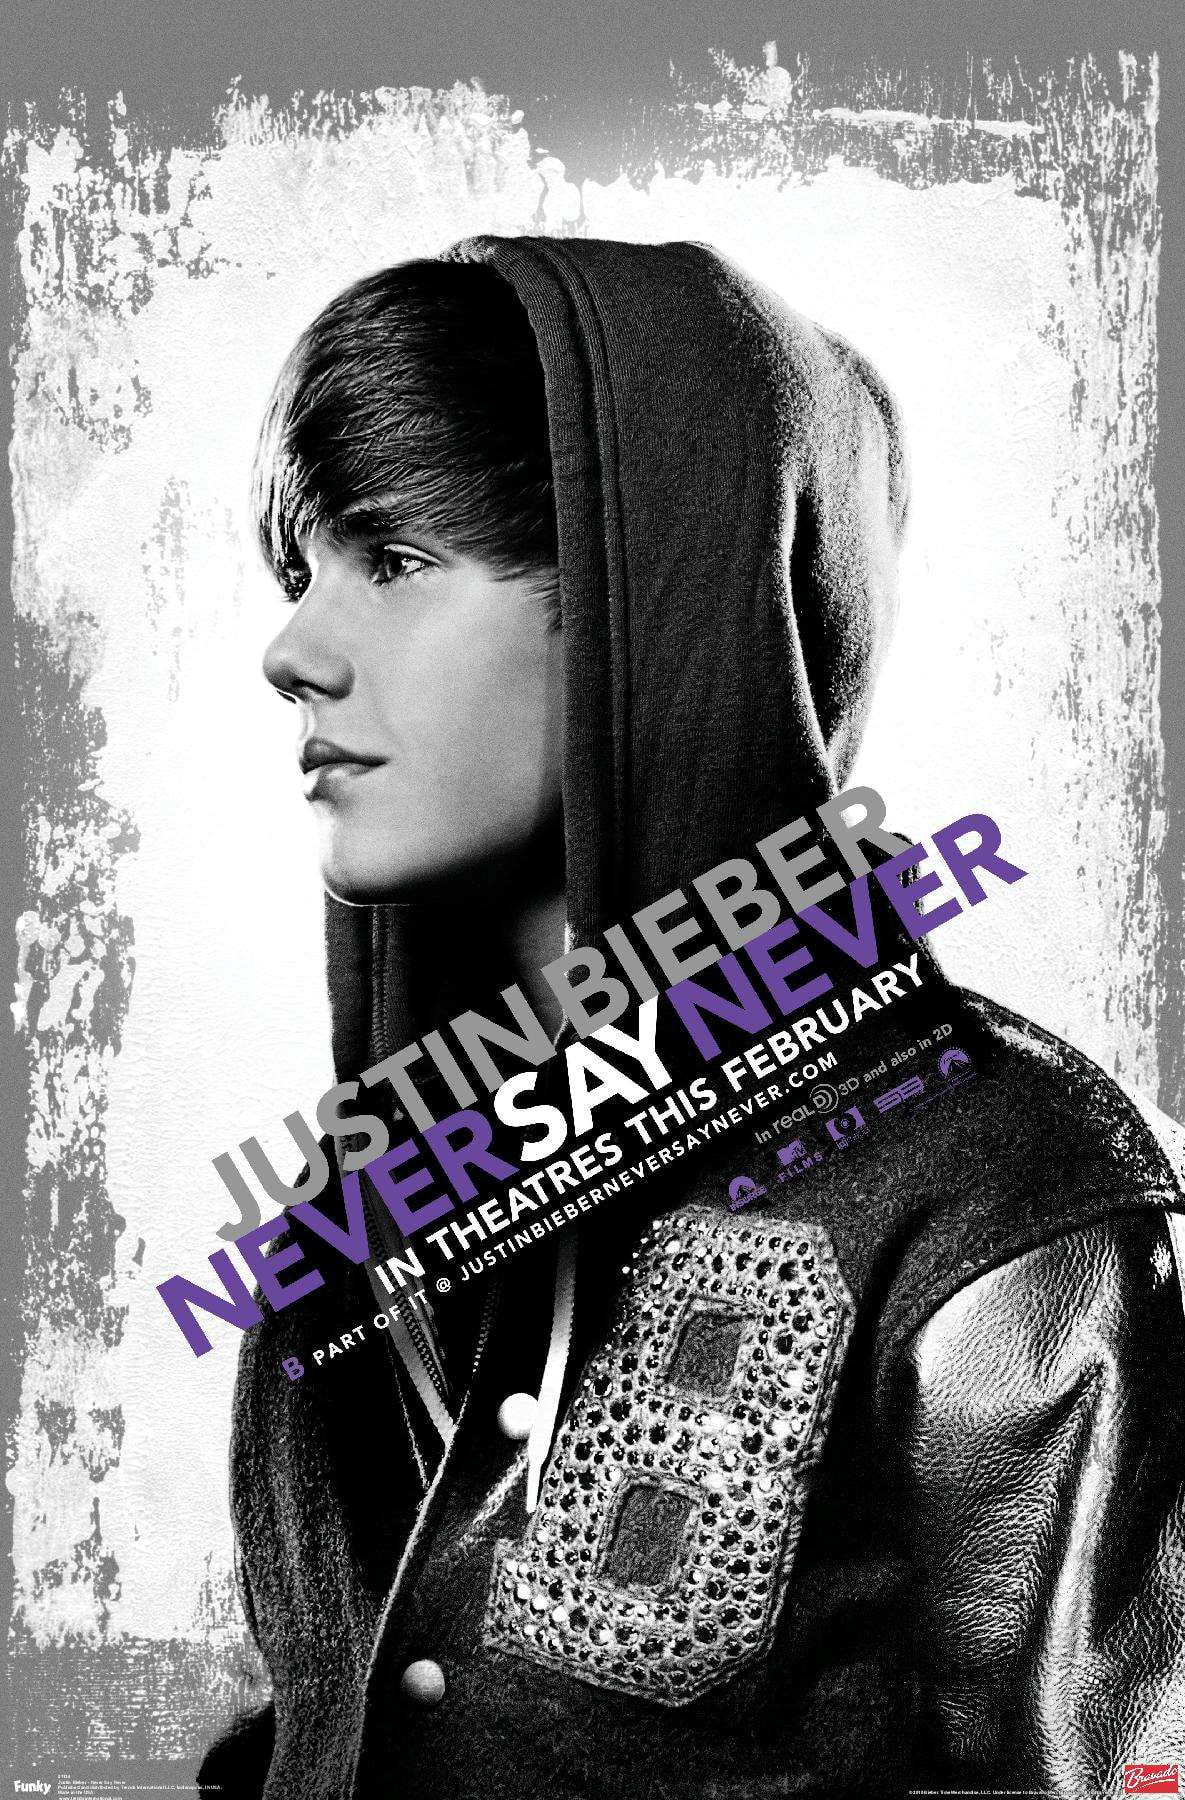 Justin Bieber Autograph Official Single Duvet Cover Bed Set Never Say Never 